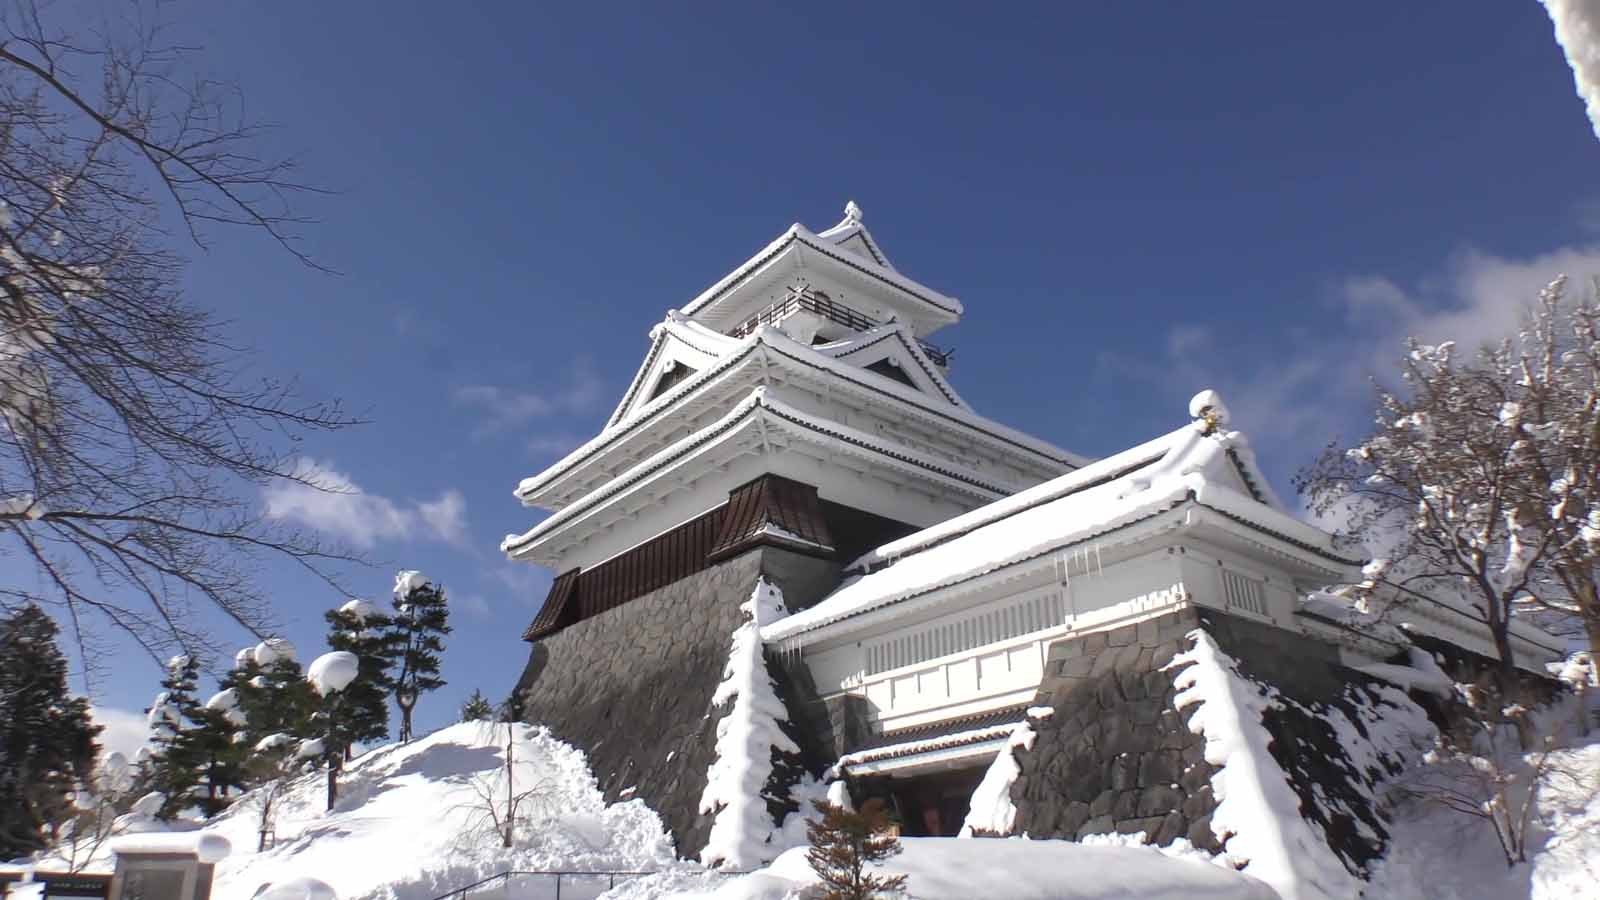 Snow and Kaminoyama Castle